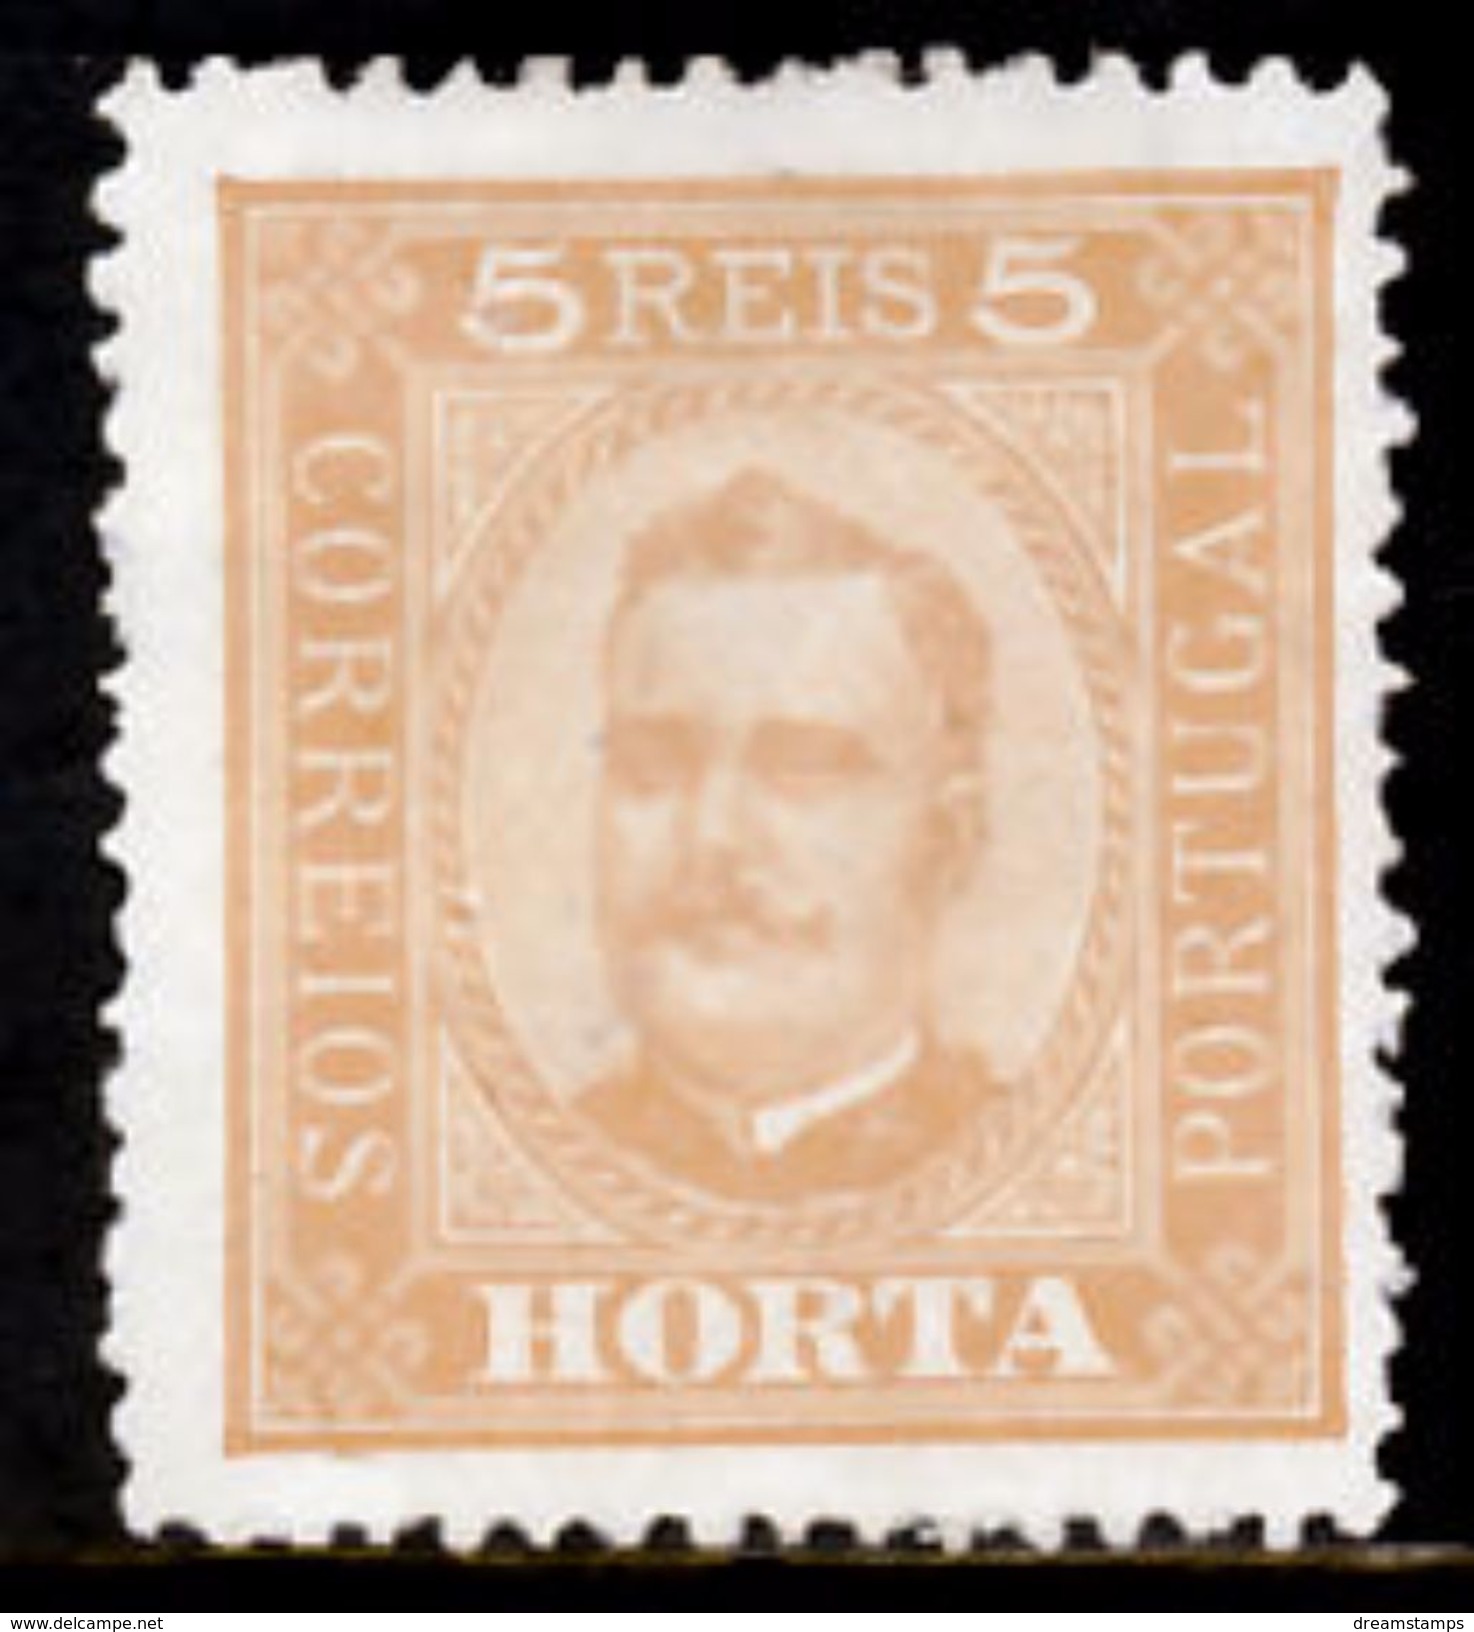 !										■■■■■ds■■ Horta 1892 AF#01(*) King Carlos Neto 5 Réis Loz 13,5 (x9417) - Horta